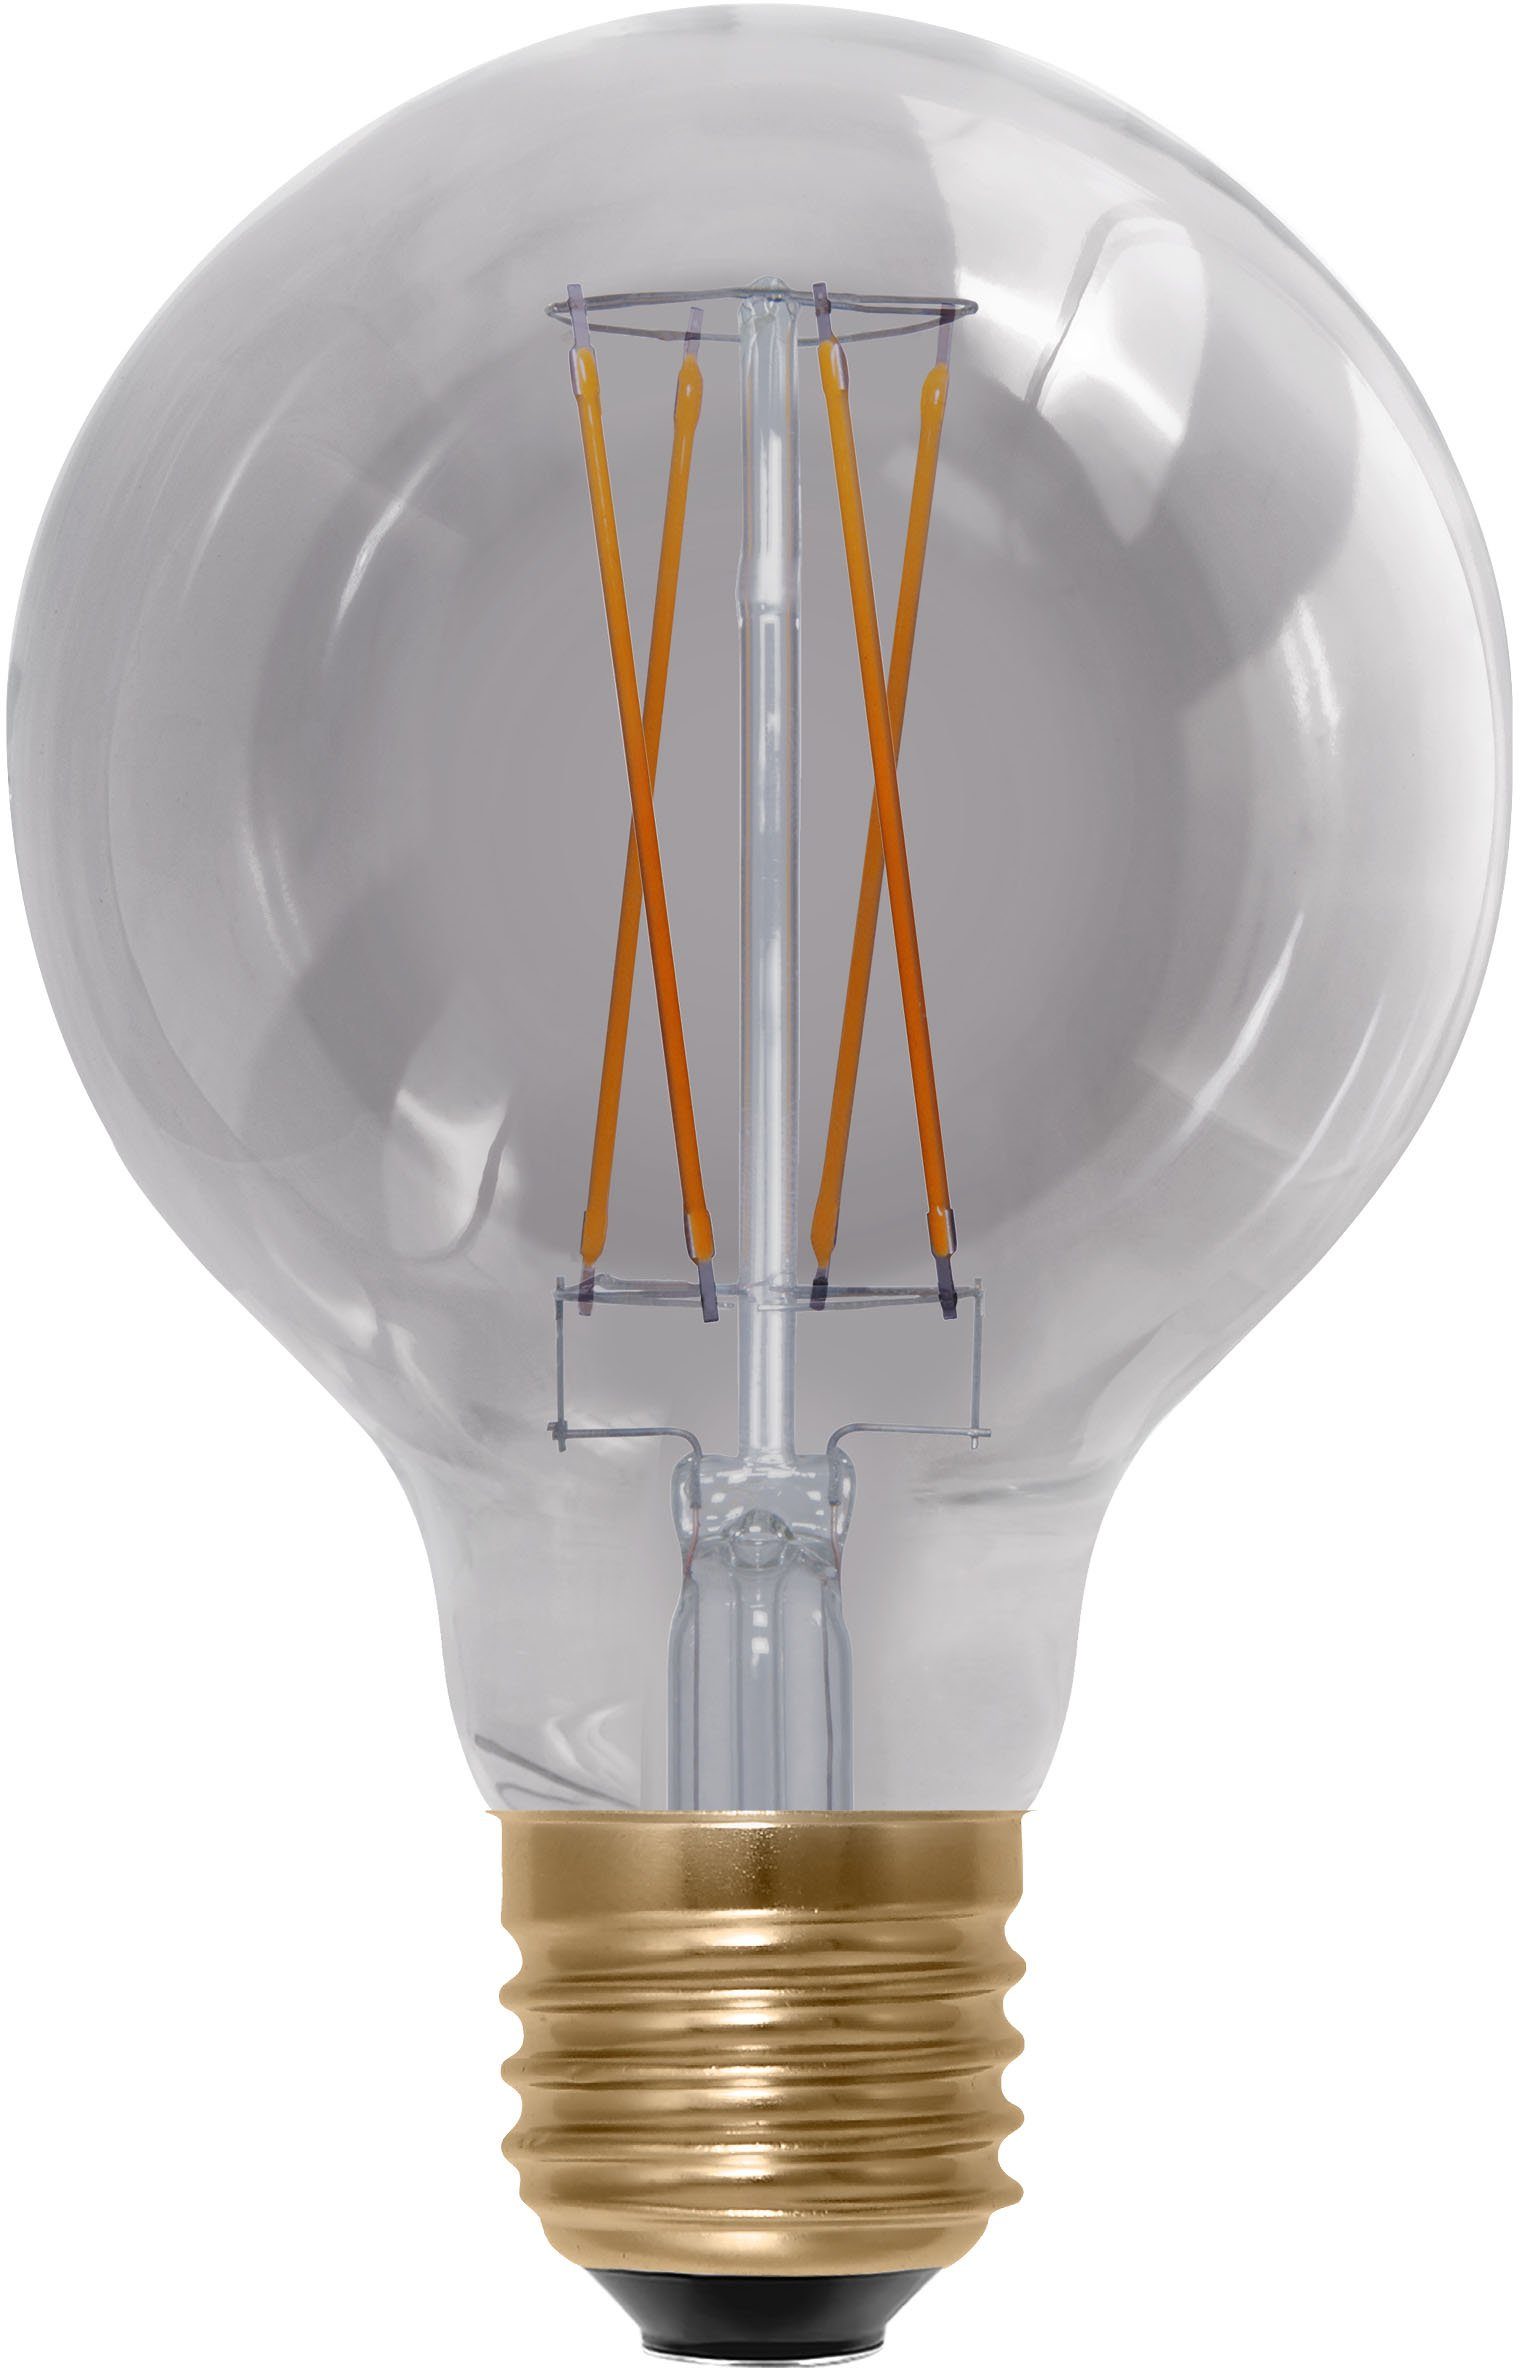 SEGULA LED-Leuchtmittel LED Globe 80 smokey grau, E27, Warmweiß, dimmbar, E27, Globe 80, smokey grau